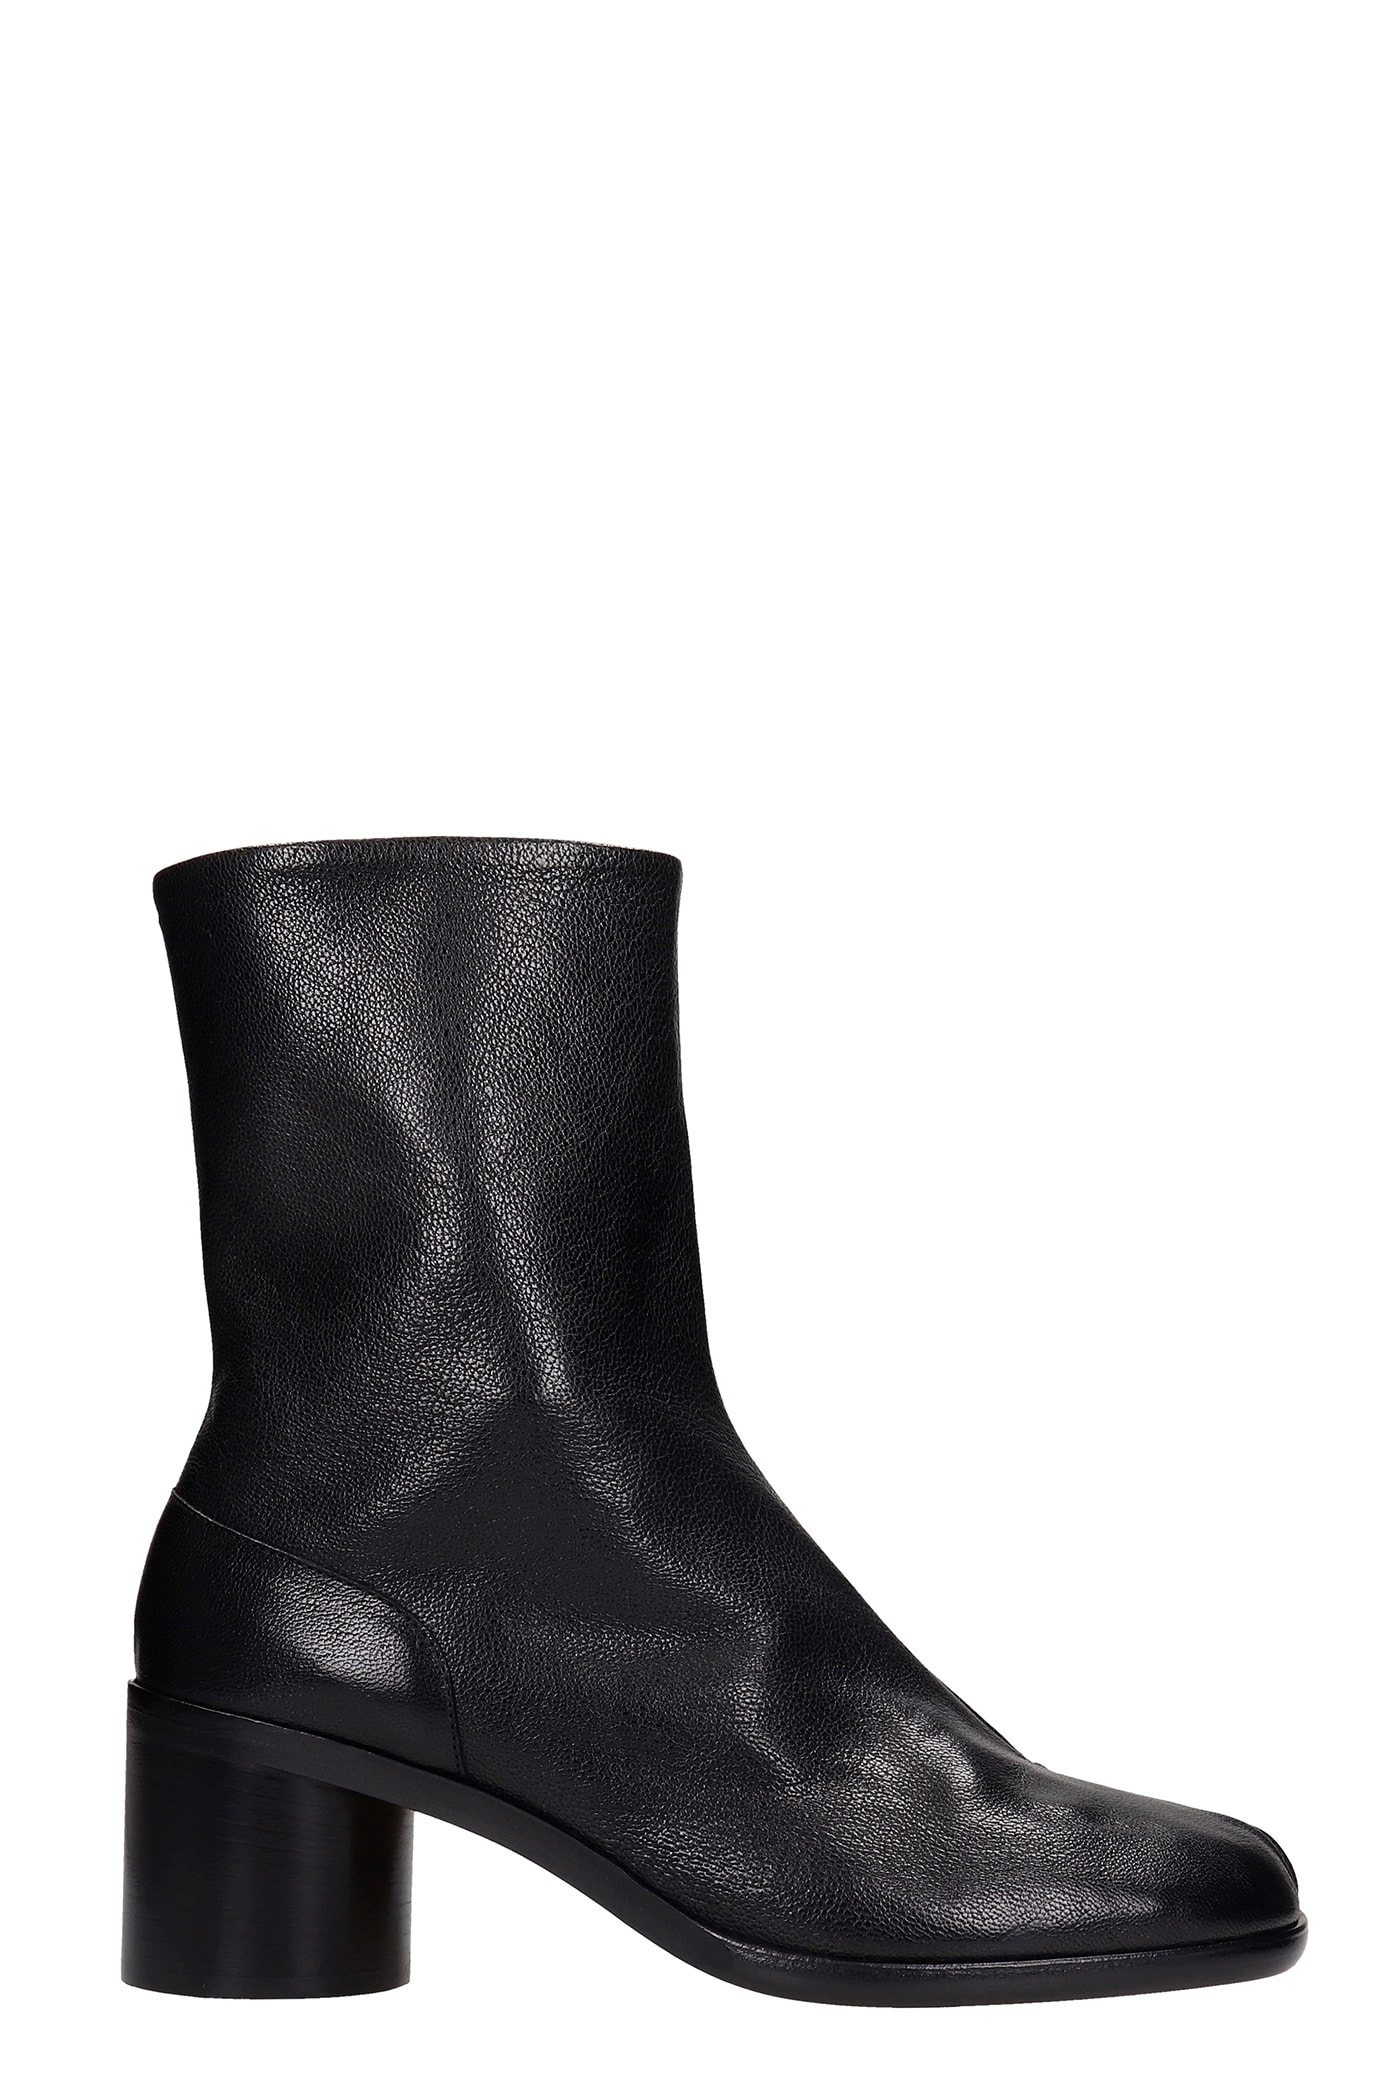 Maison Margiela Tabi Ankle Boots In Black | ModeSens